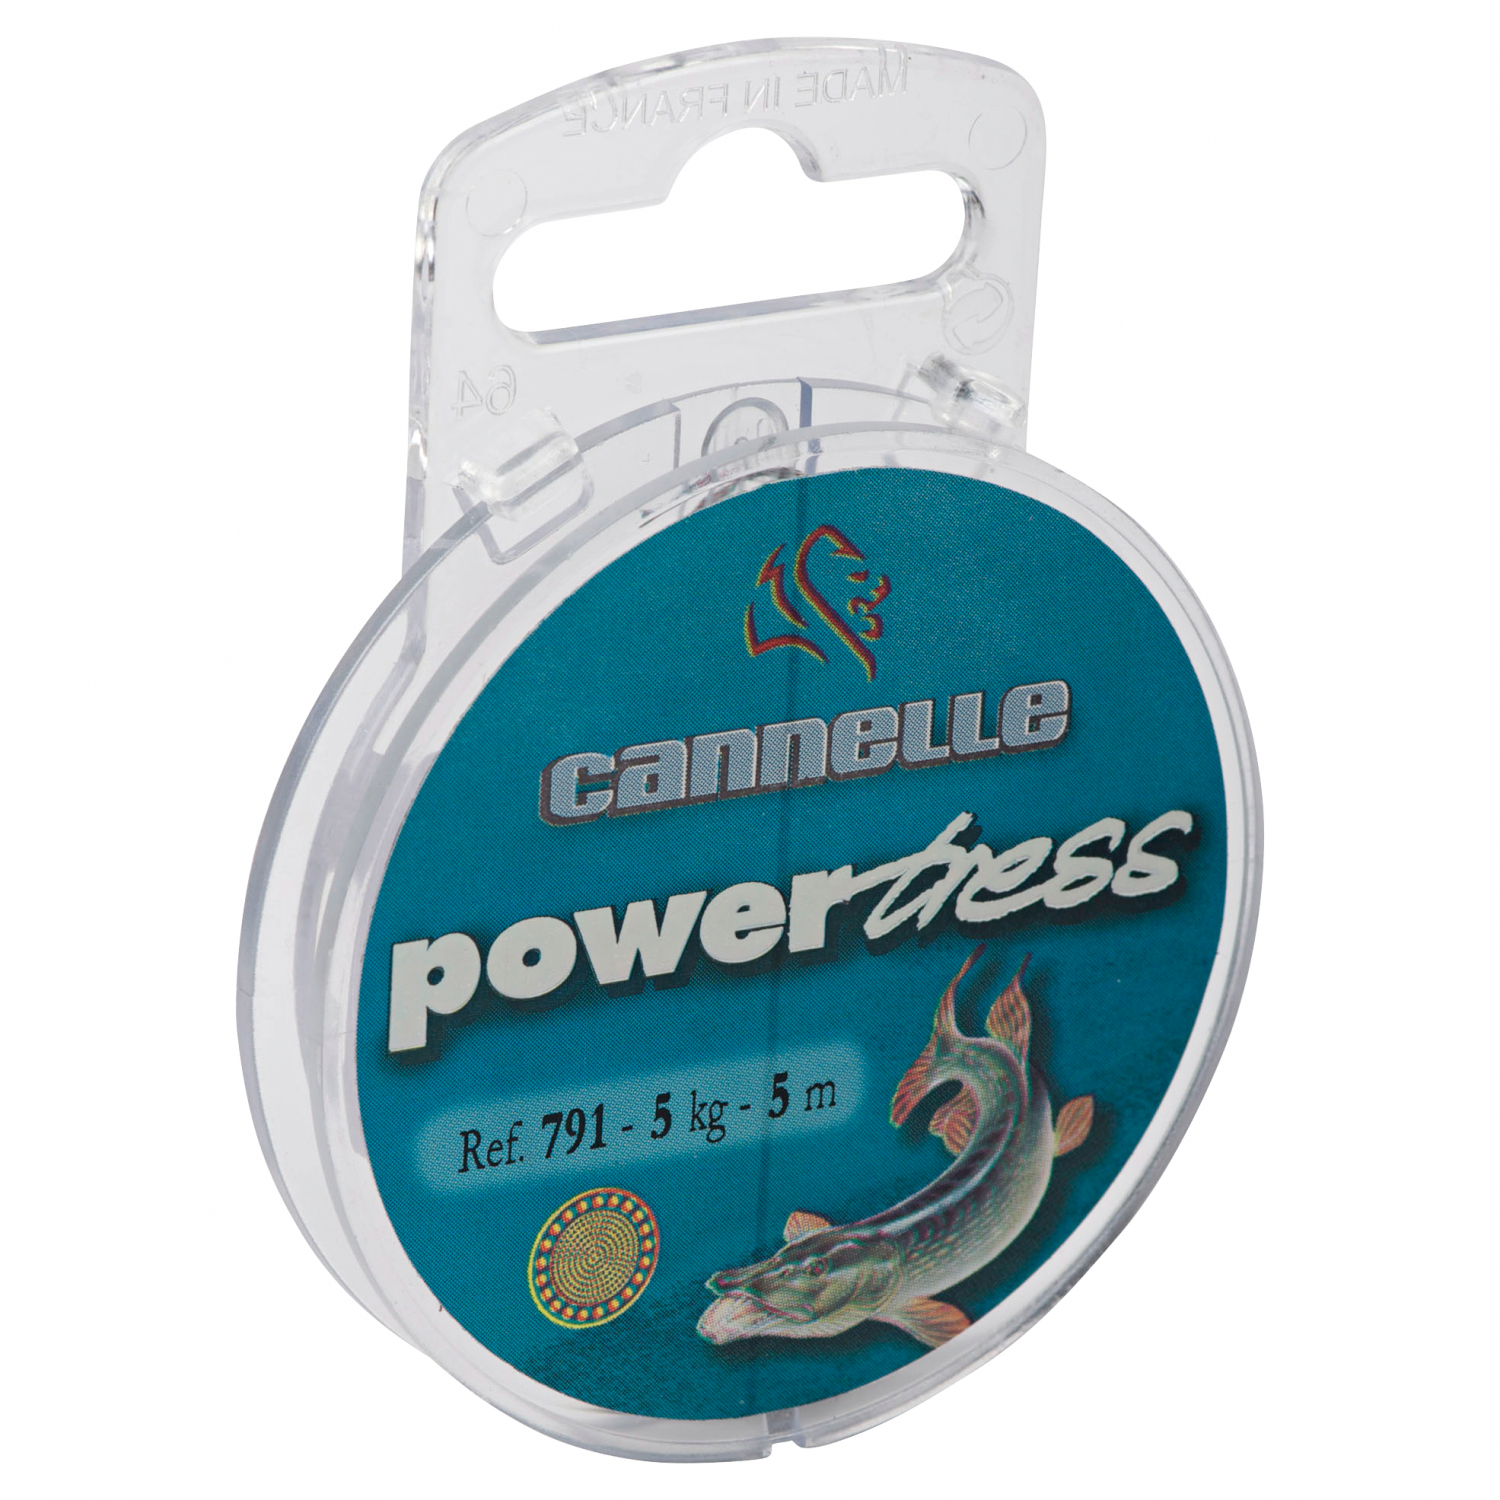 Cannelle Leader Line Powertress C791 